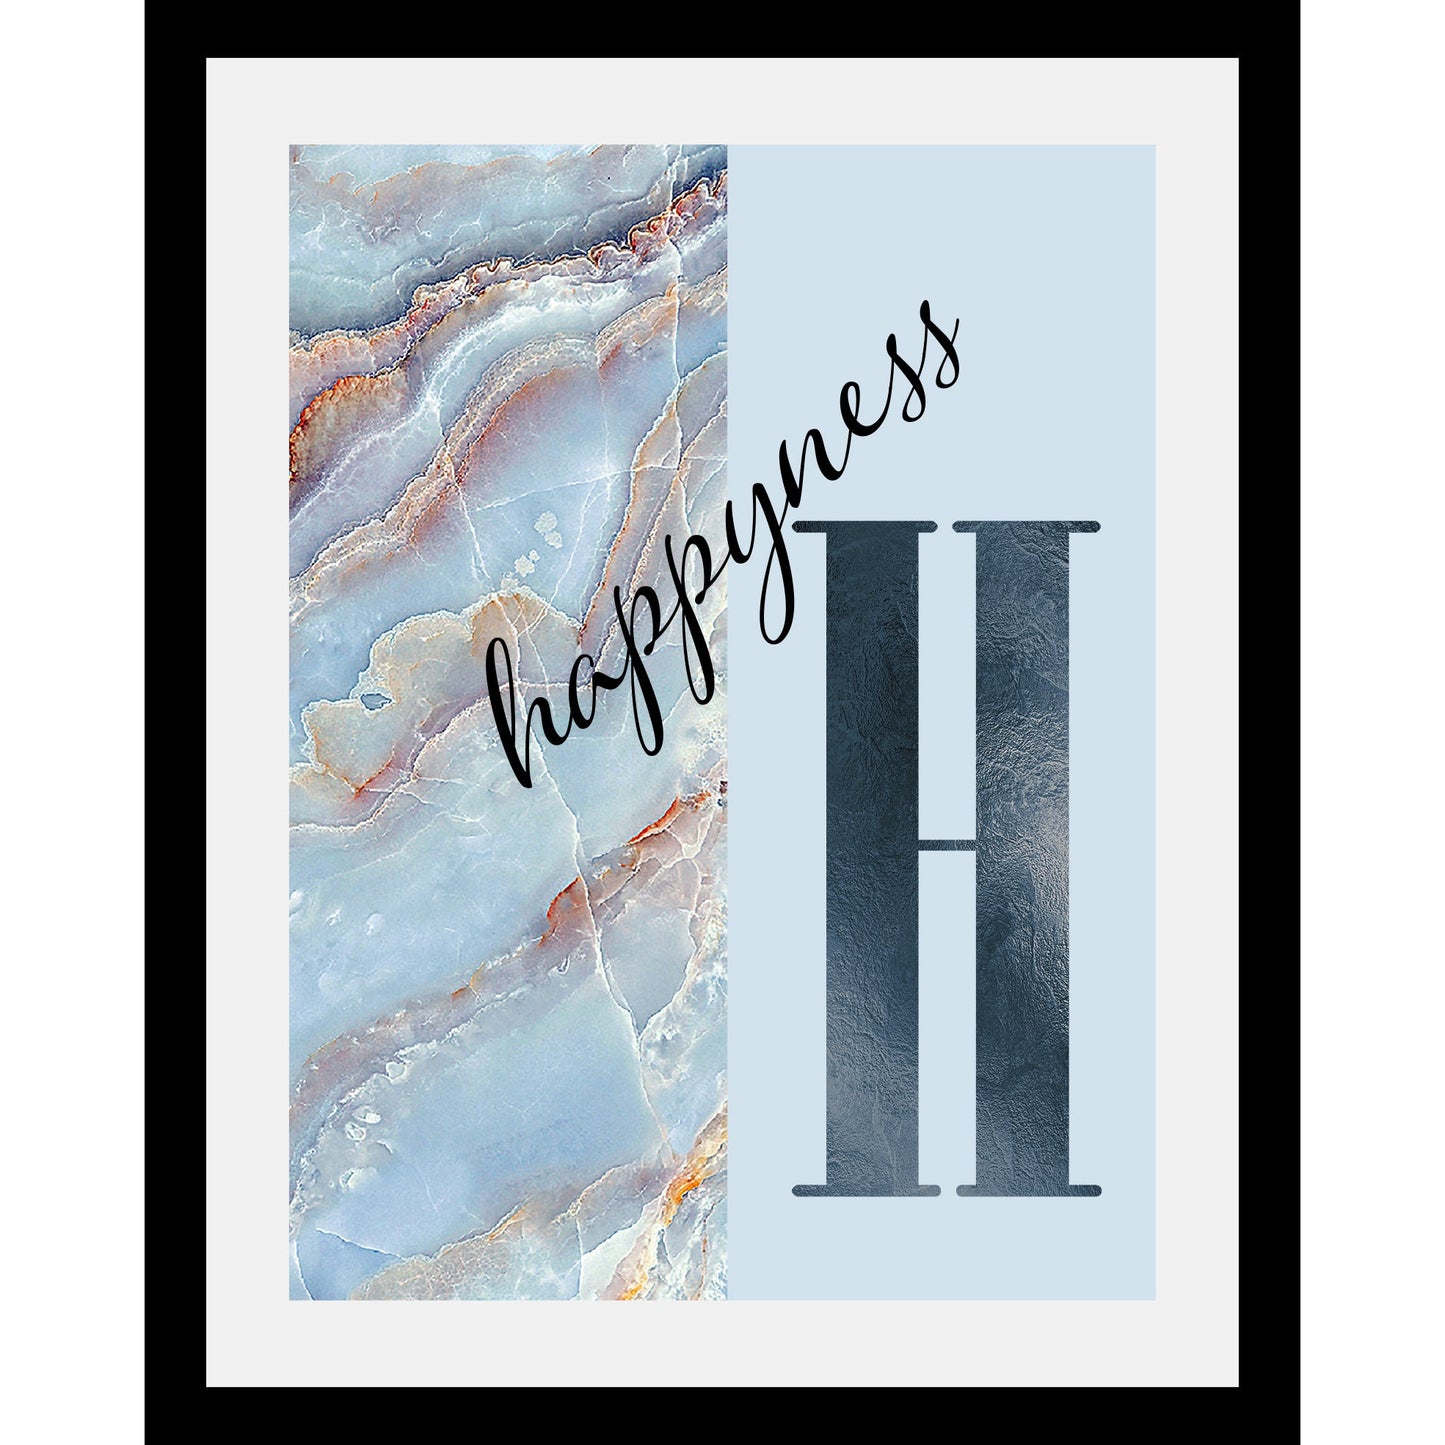 Rahmenbild - happyness